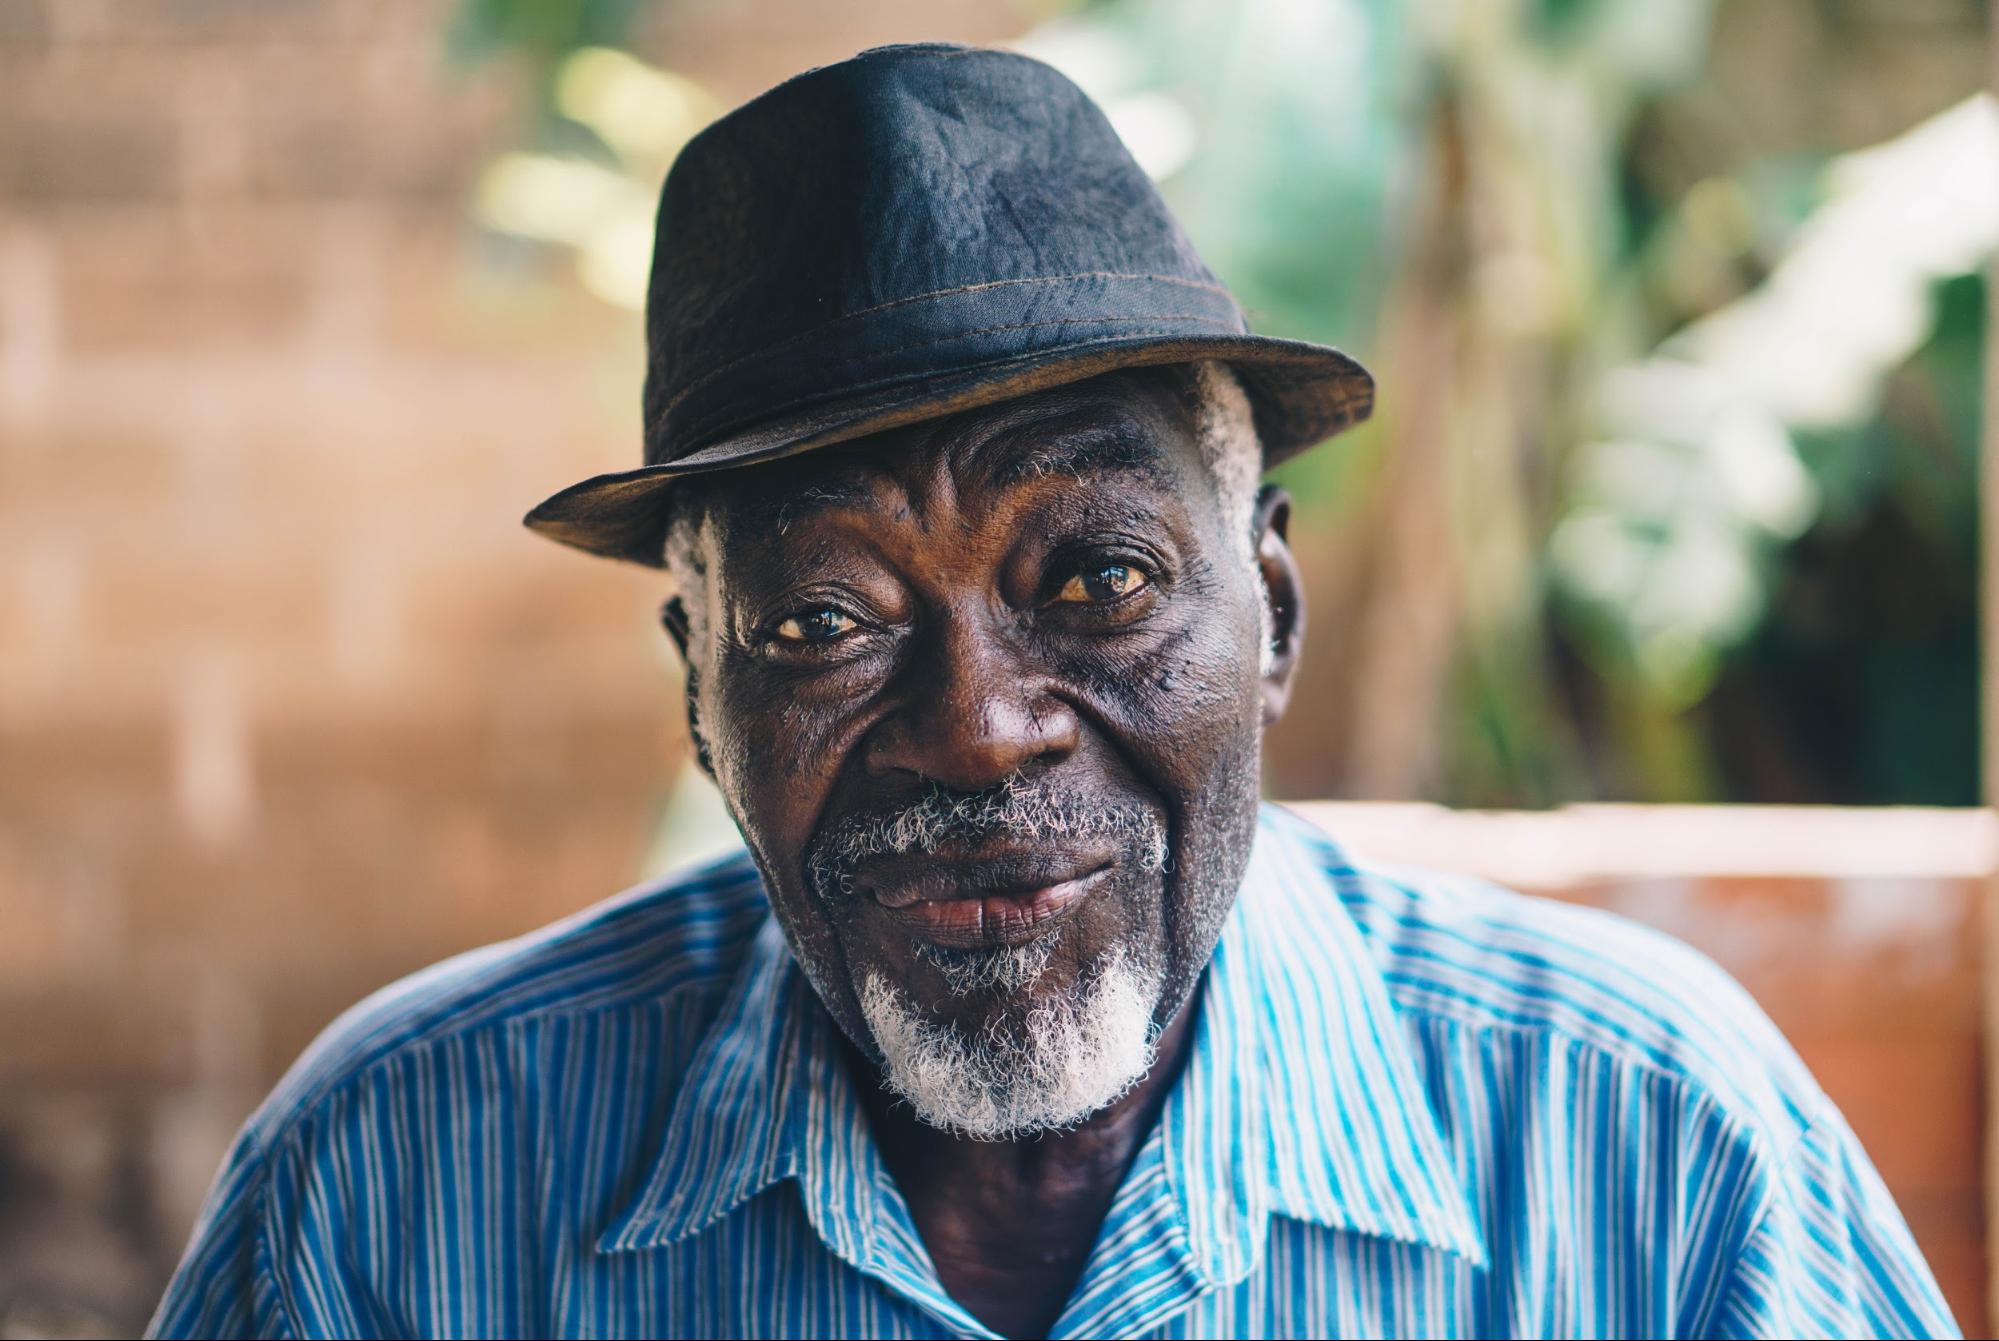 Older gentleman in a hat sitting outdoors - Focus Care